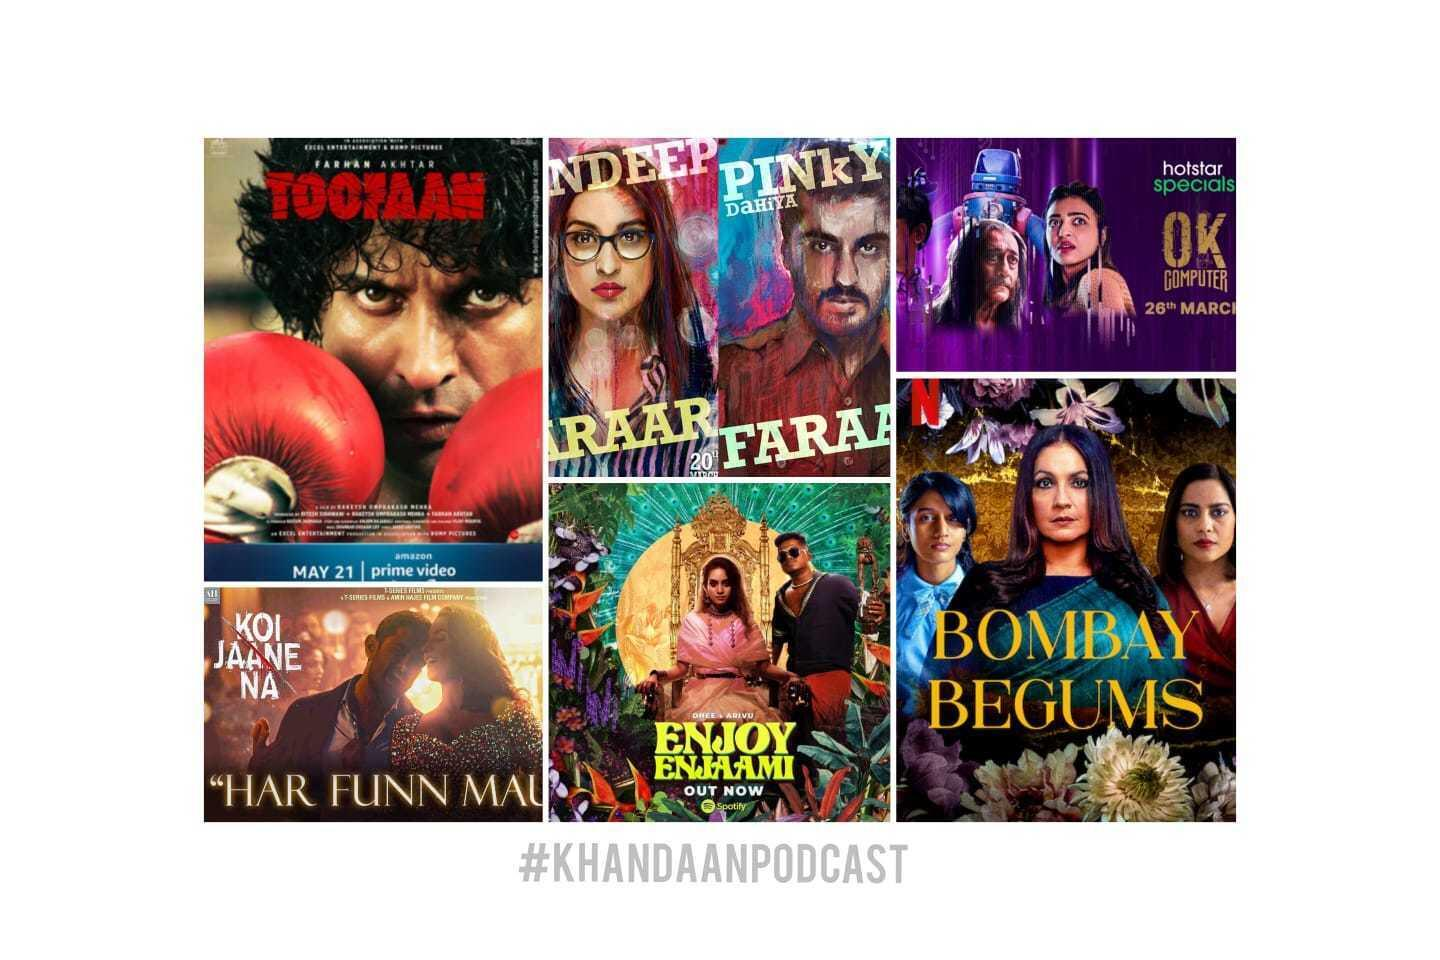 Ep 97- Toofan, Sandeep Aur Pinky Trailers and Bombay Begums